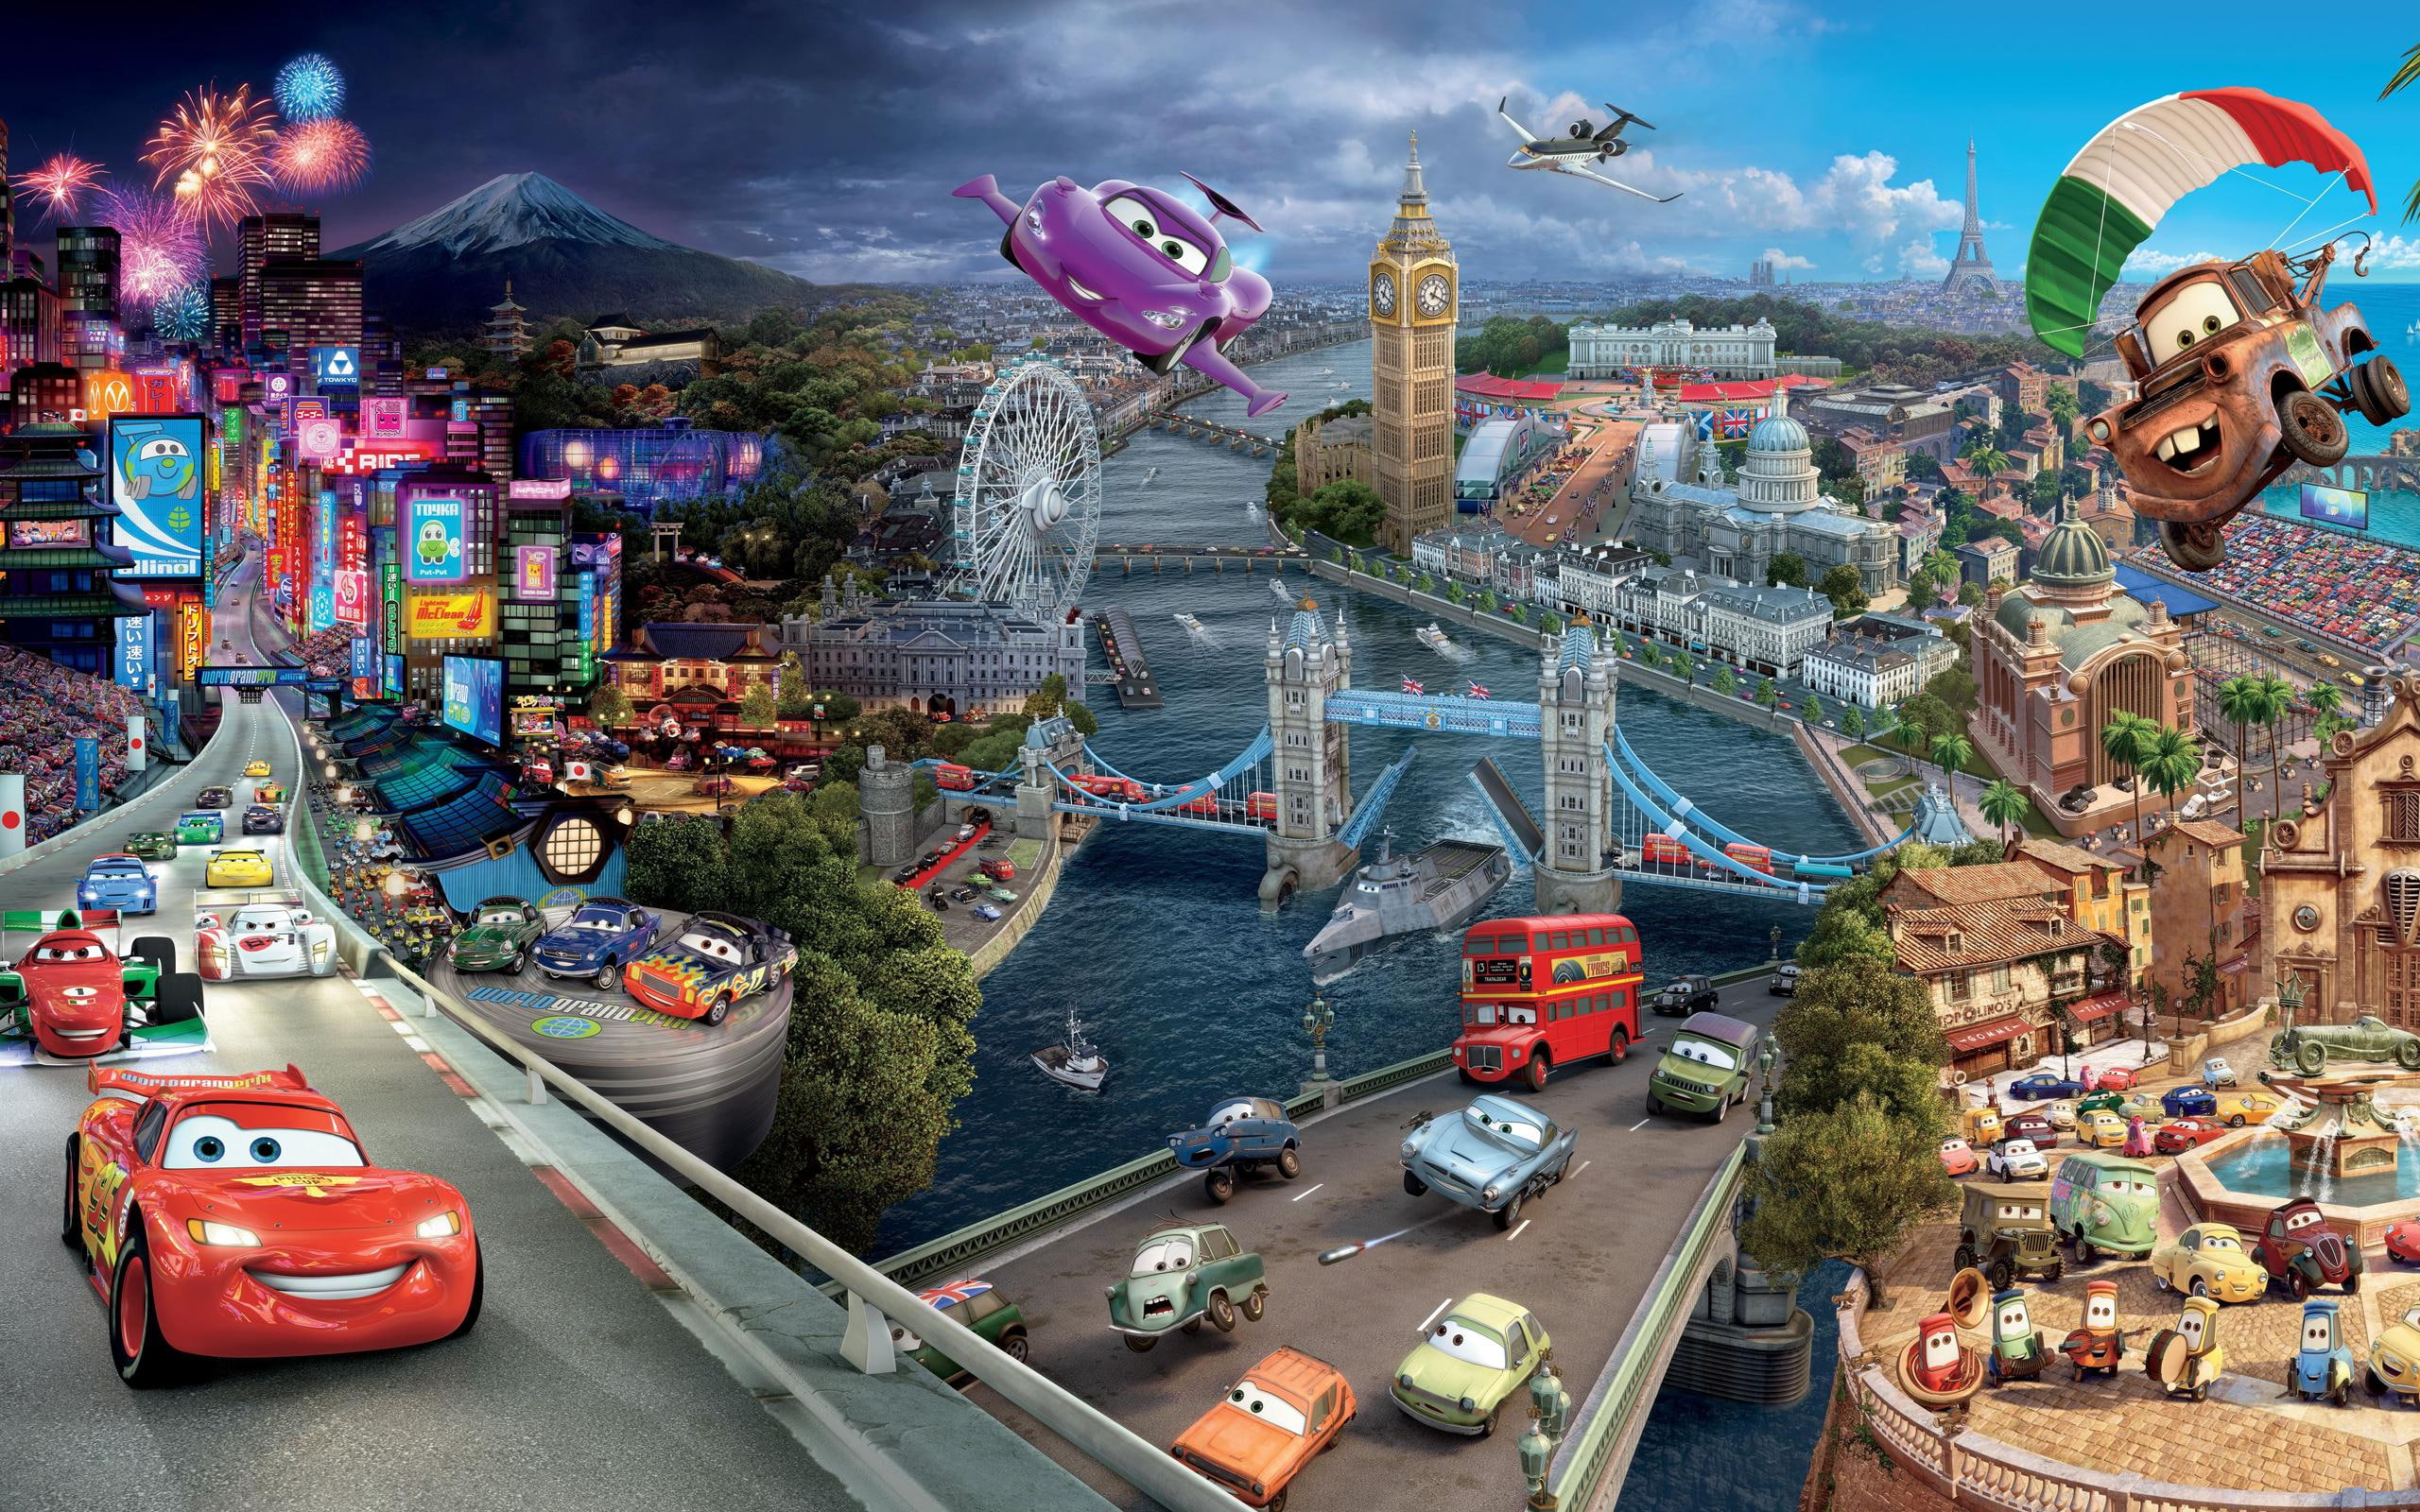 Cars 2 High Resolution, pixar's movies